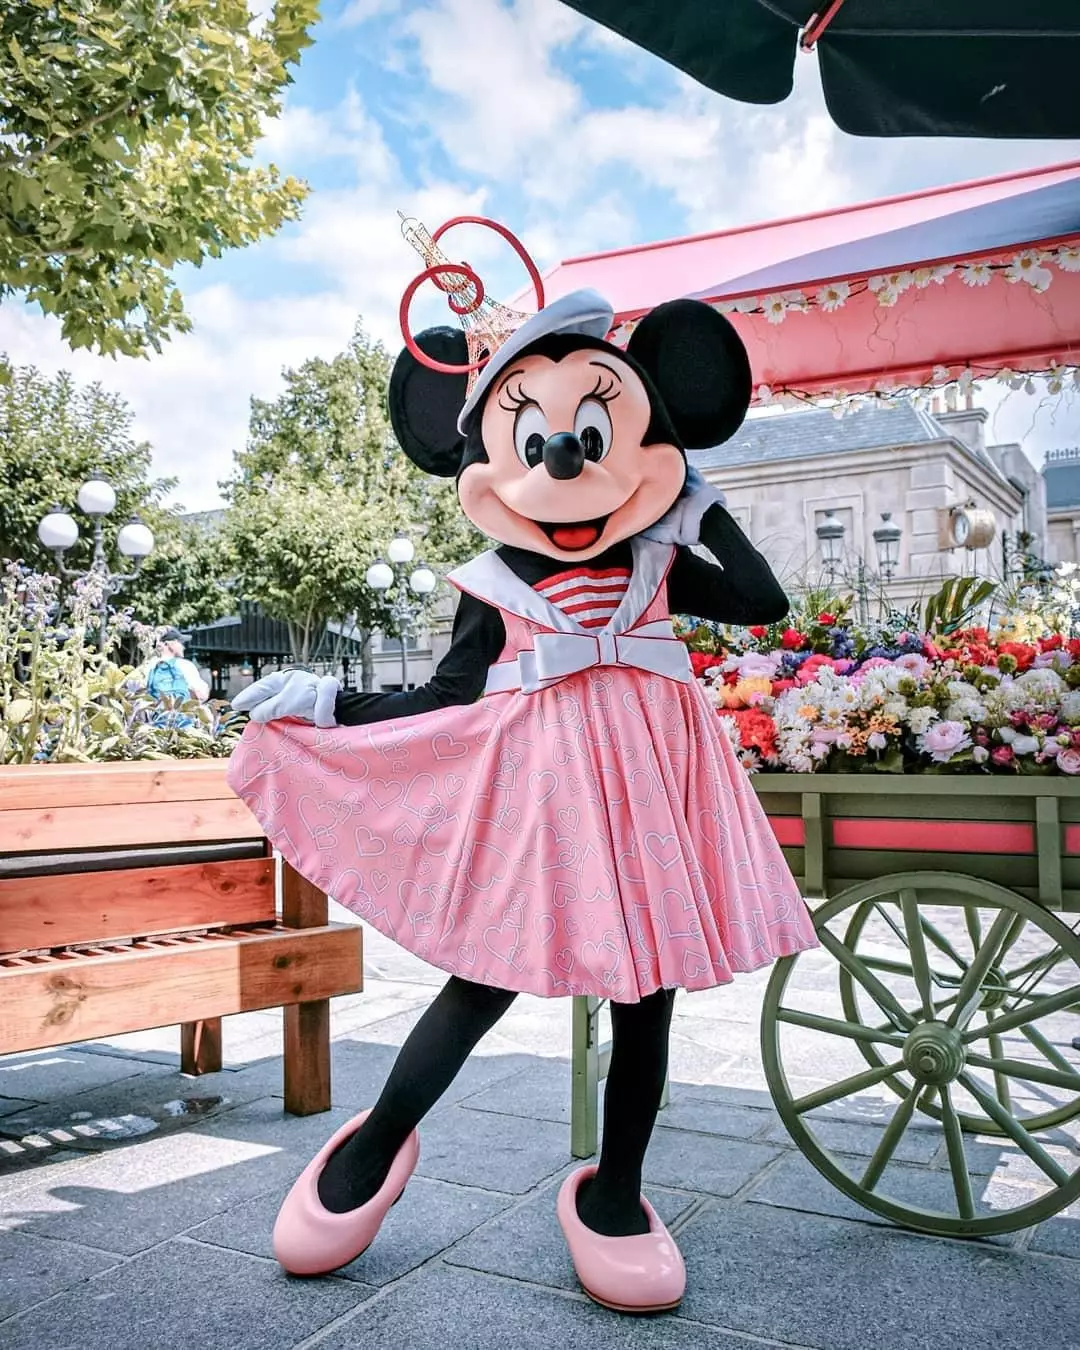 President of Disneyland Paris Natacha Rafalski confirmed that the reopening will begin on 15th July (